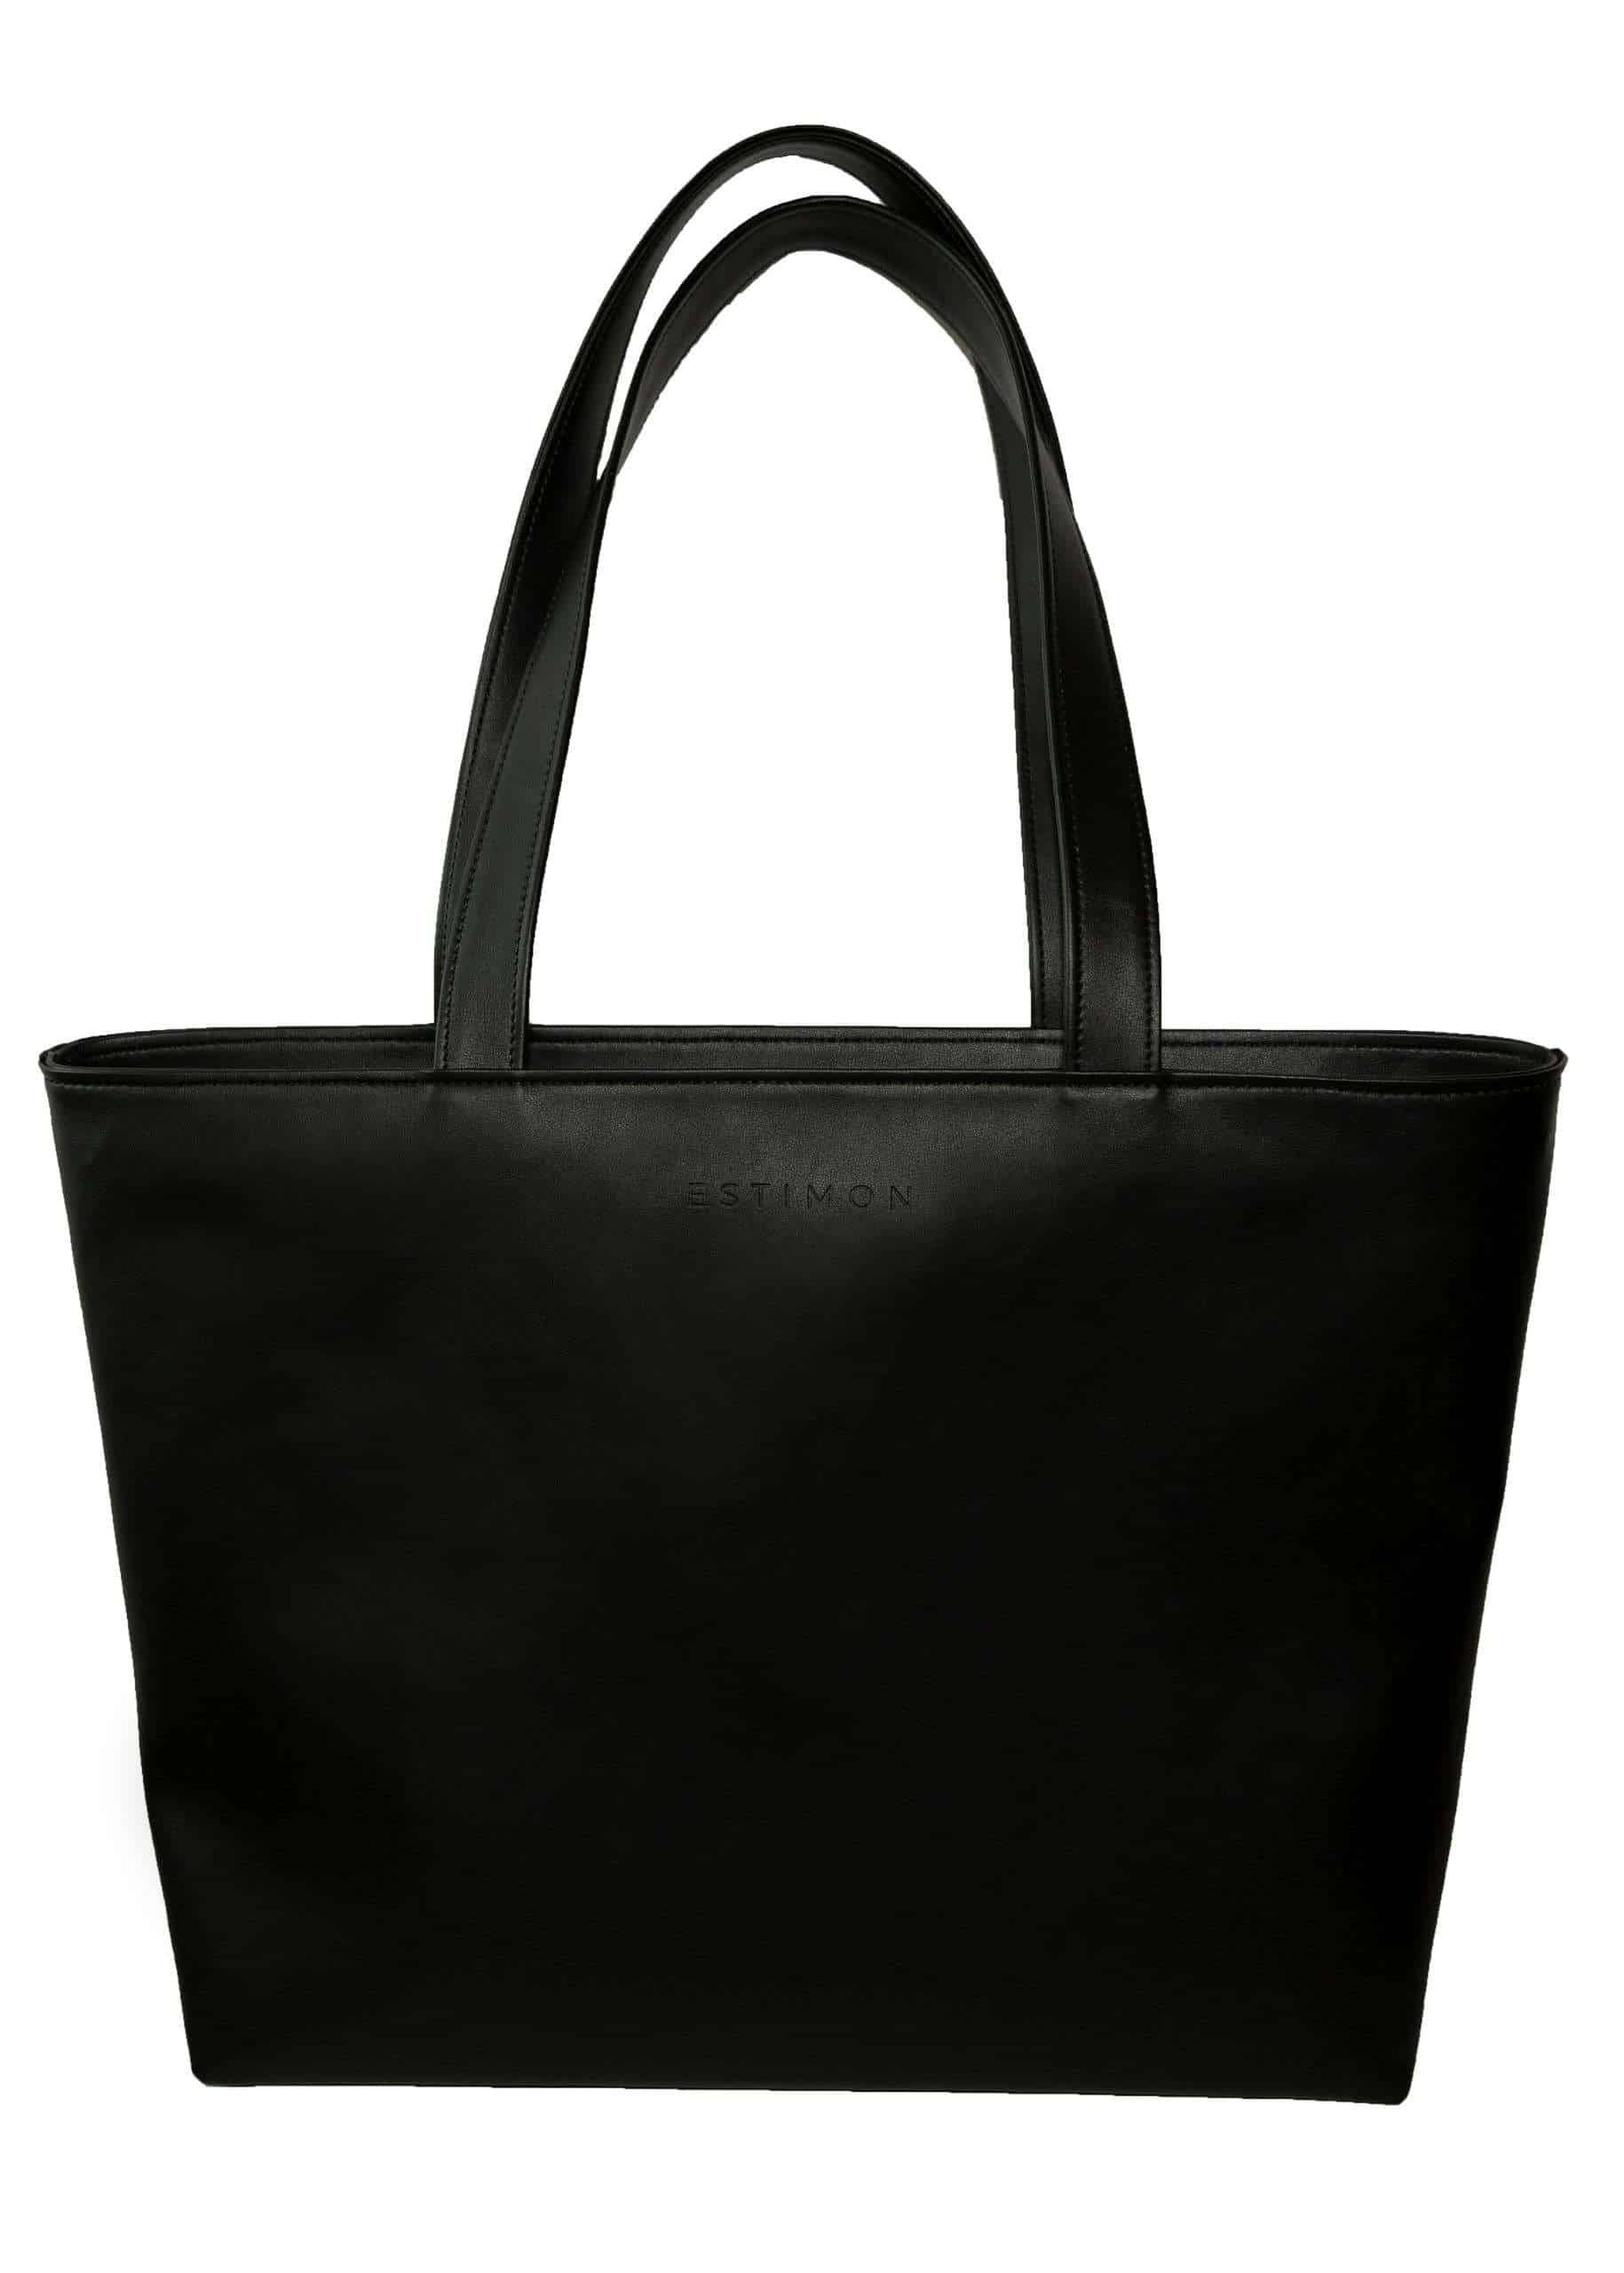 wegańska, czarna torebka w stylu shopper ze skóry z kukurydzy. vegan corn leather shopper bag in black colour.